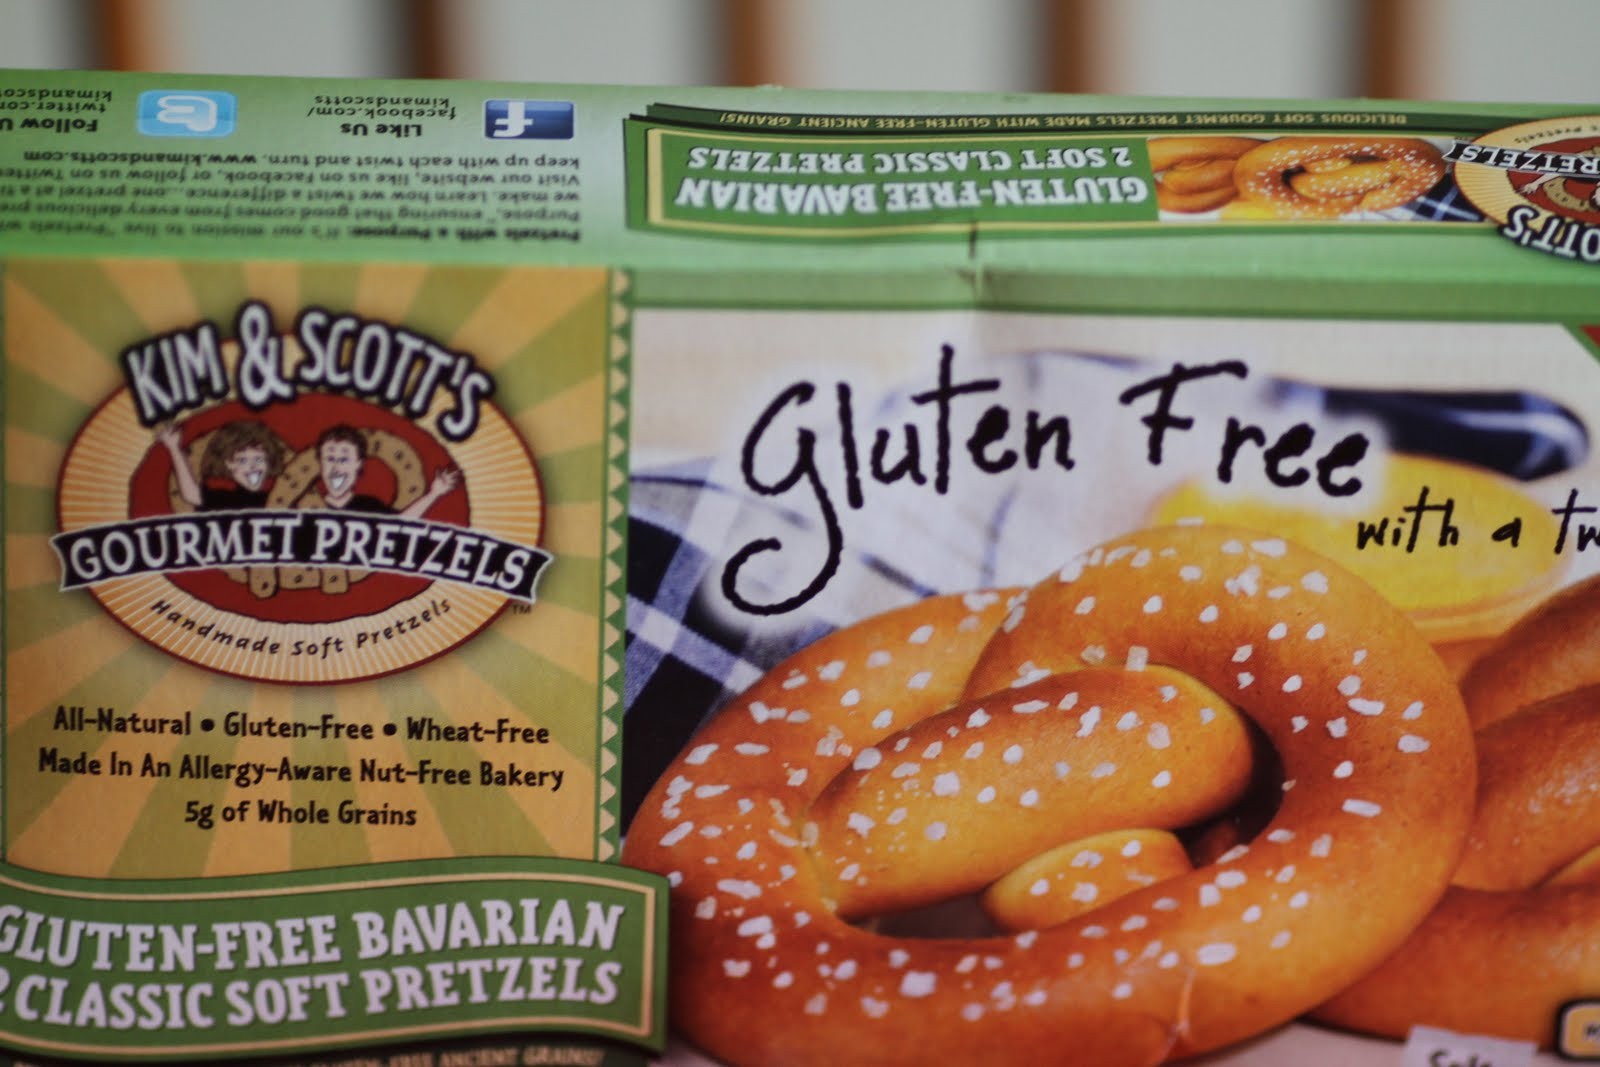 Kim And Scott Gourmet Pretzels
 Learning to Eat Allergy Free Kim and Scott’s New Gluten